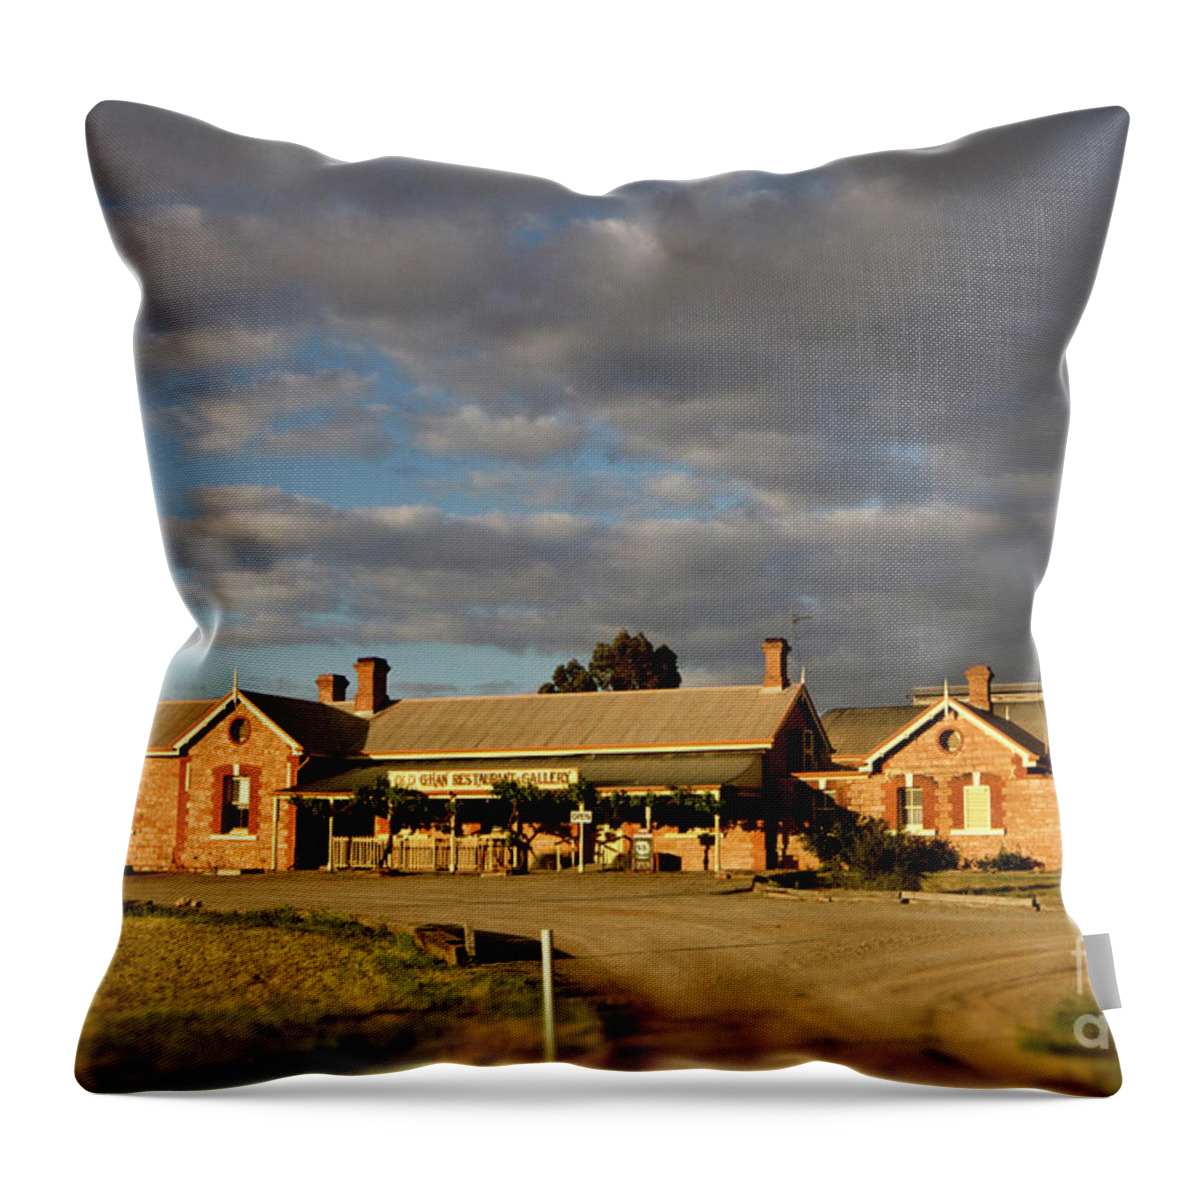 Old Ghan Railway Restaurant Throw Pillow featuring the photograph Old Ghan Railway Restaurant by Douglas Barnard